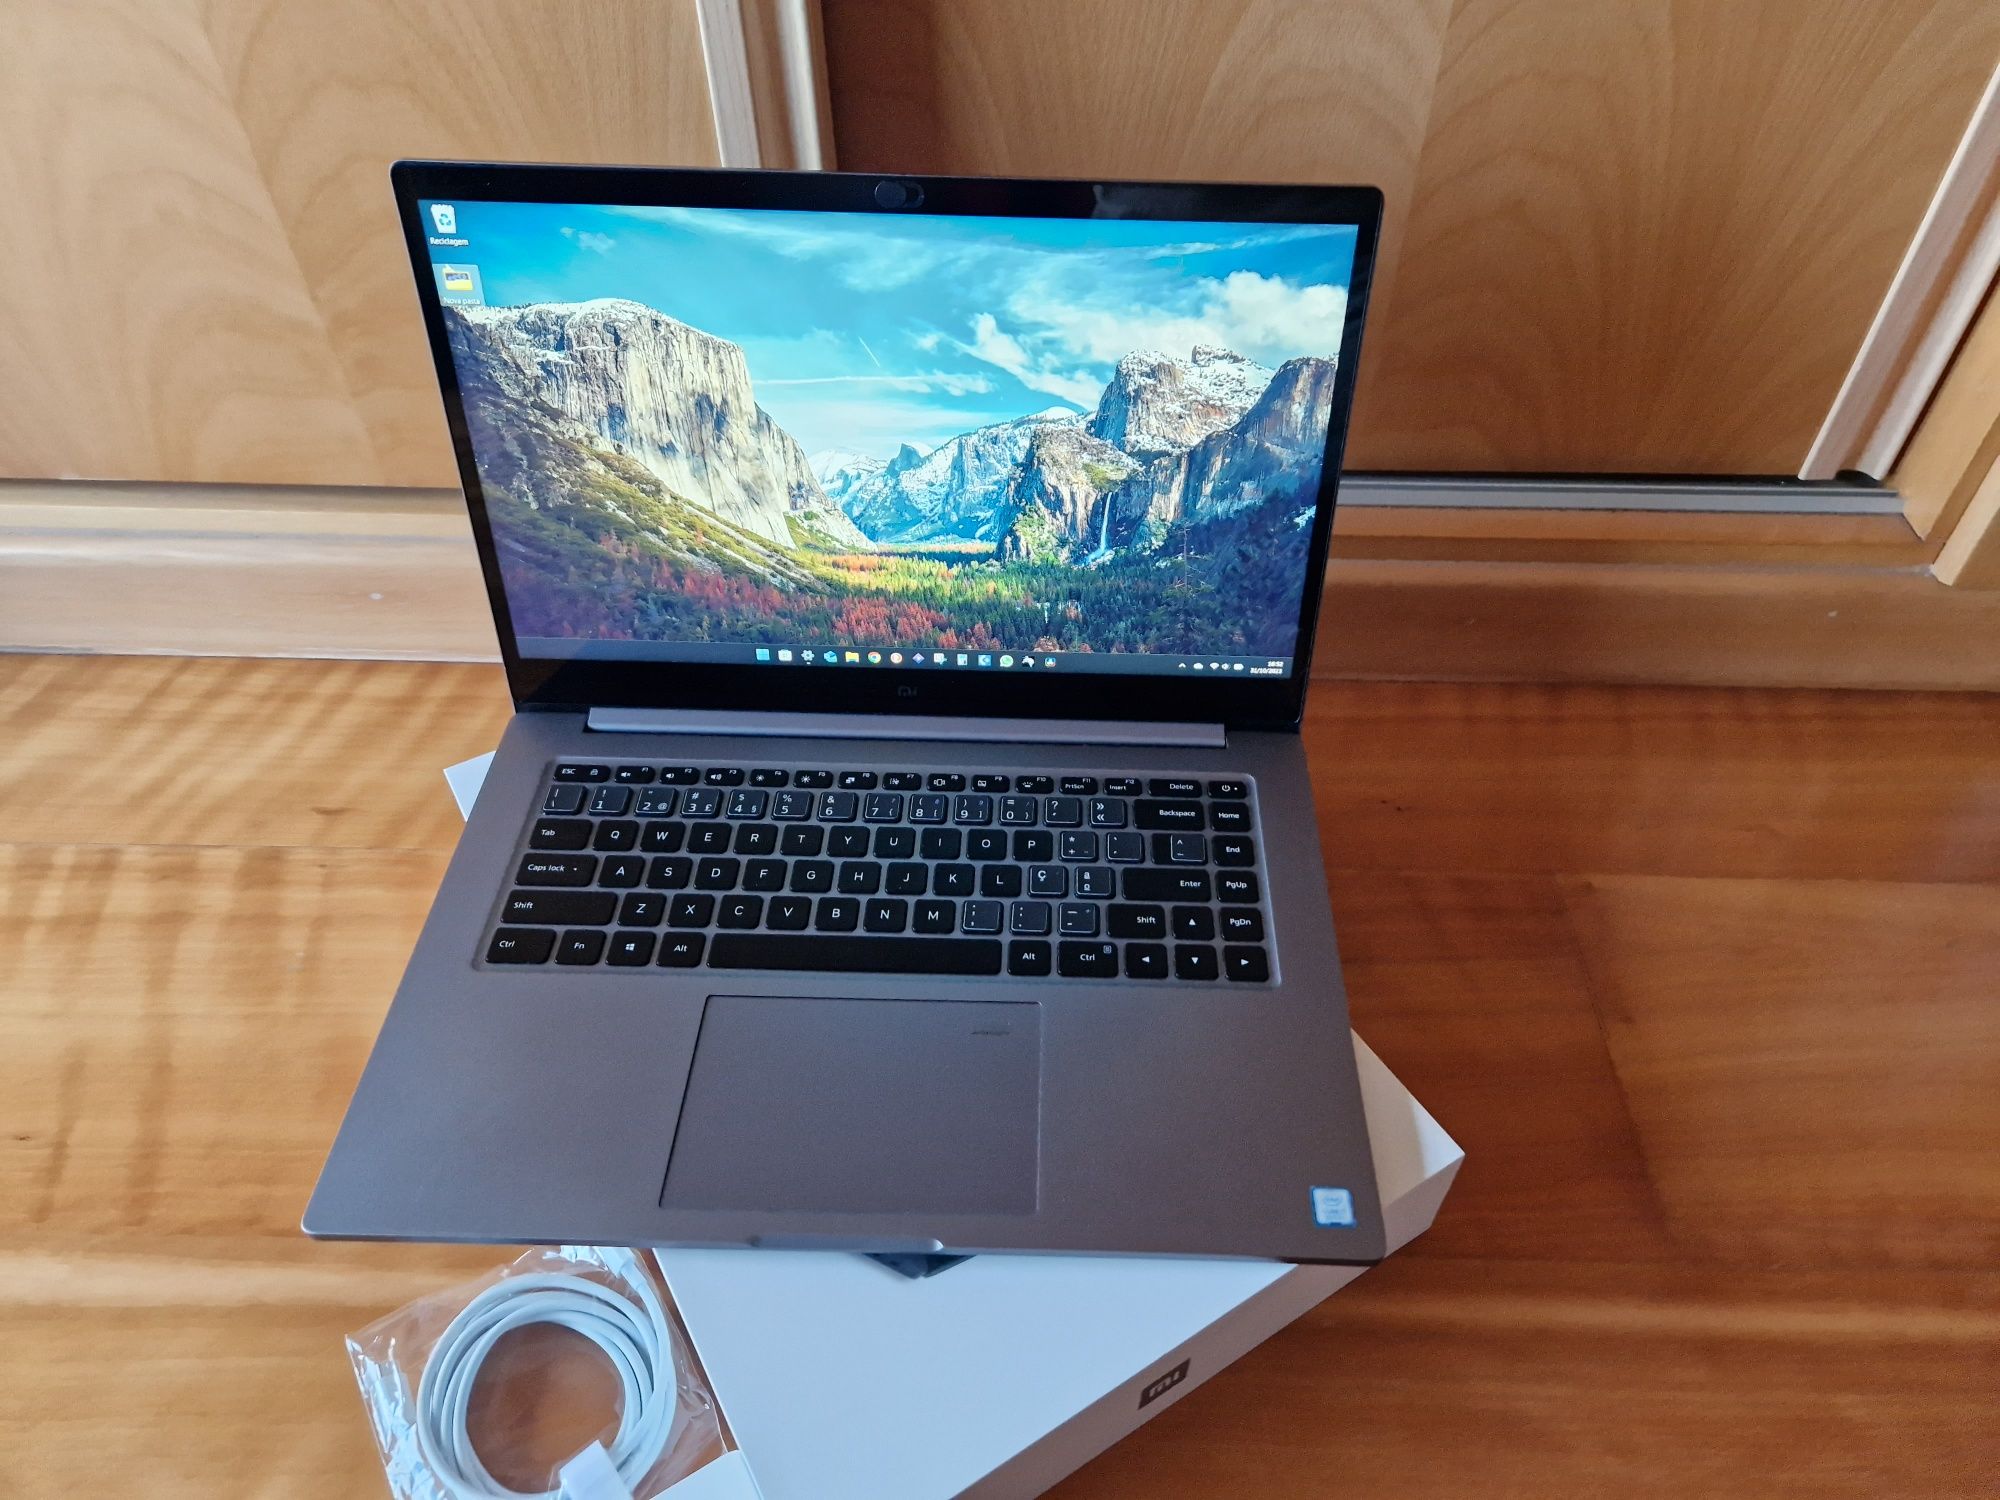 Xiaomi notebook pro Intel core i7